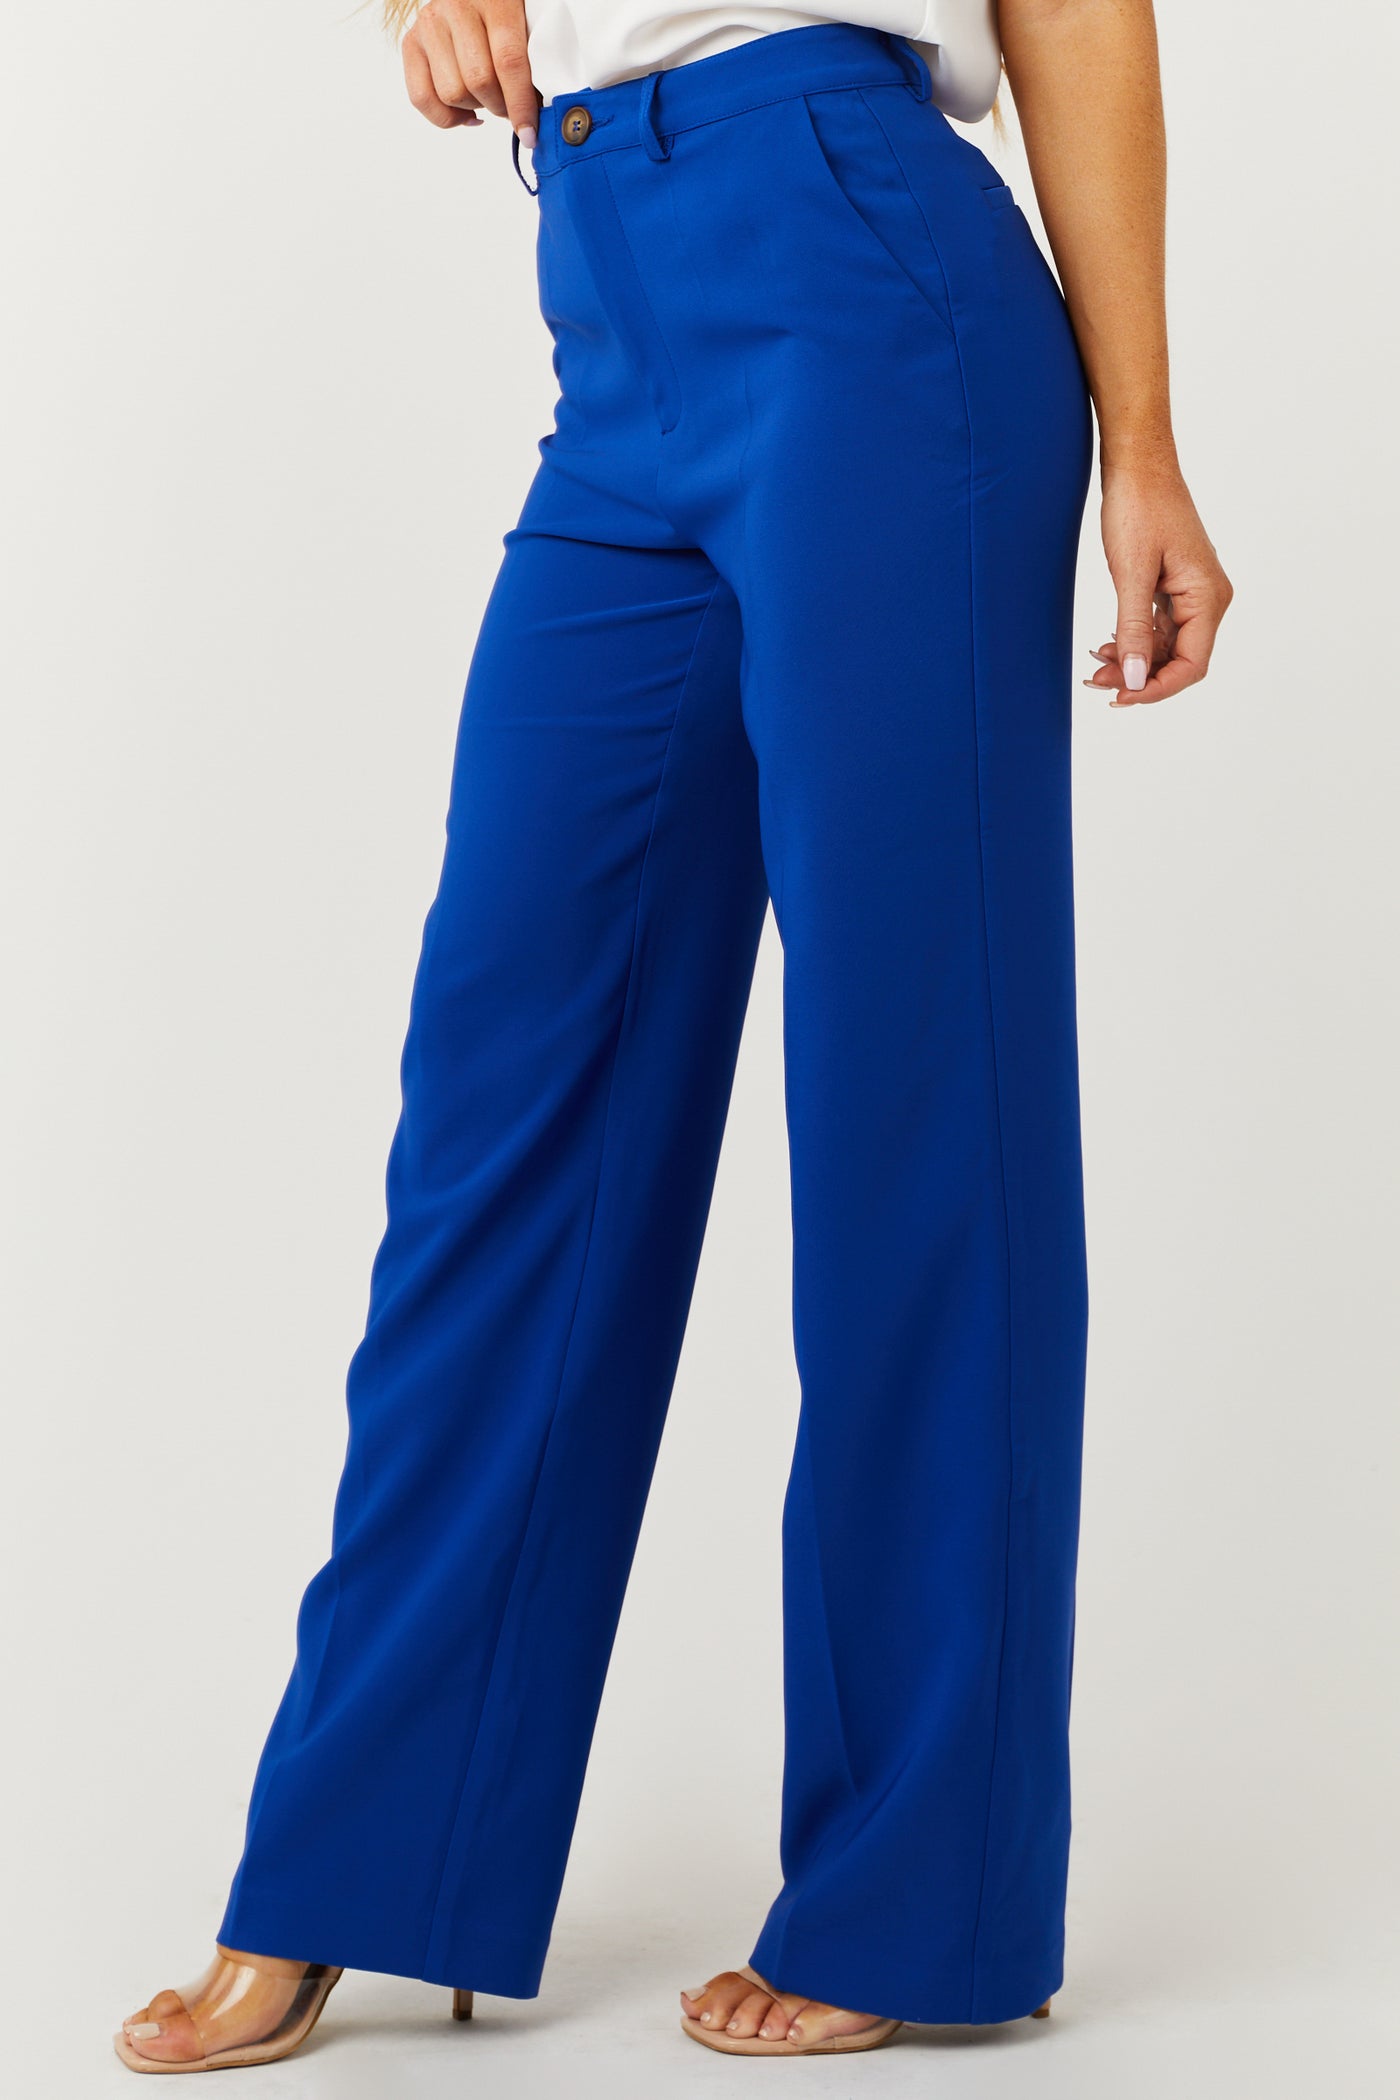 Casual Plain Straight Leg Royal Blue Women's Pants (Women's)